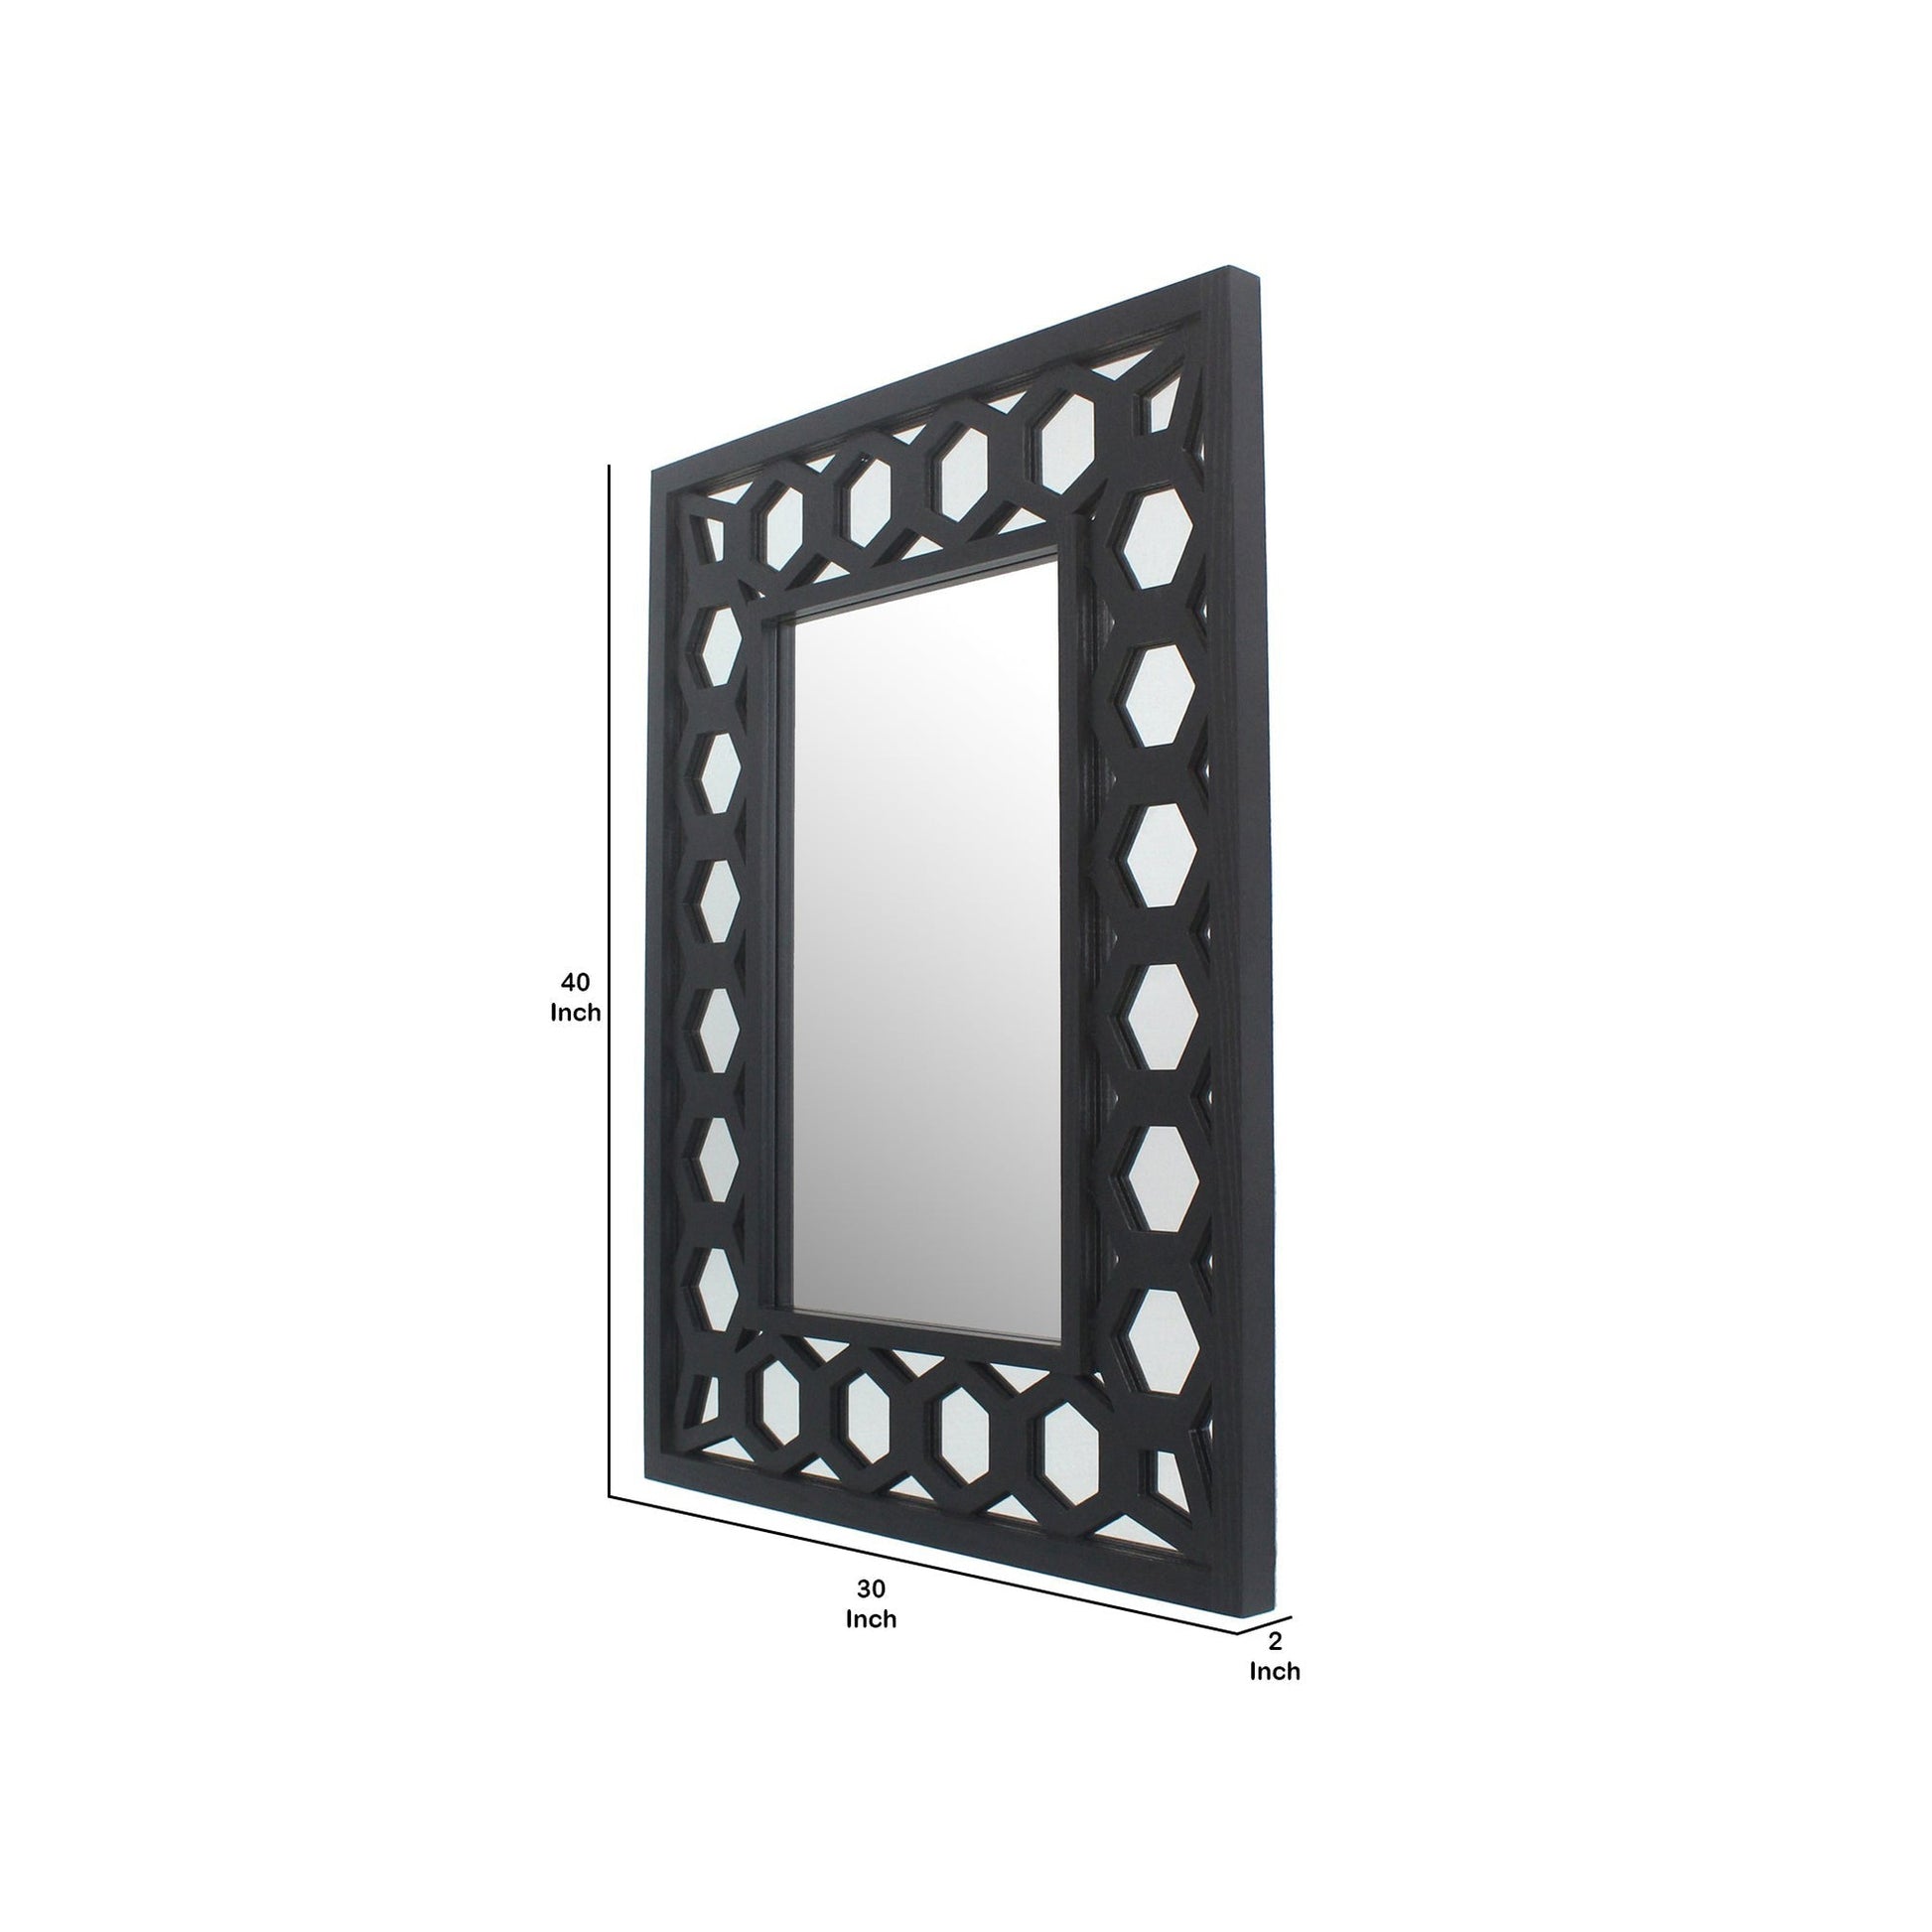 Benzara 40" Black Rectangular Wooden Dressing Mirror With Lattice Pattern Design